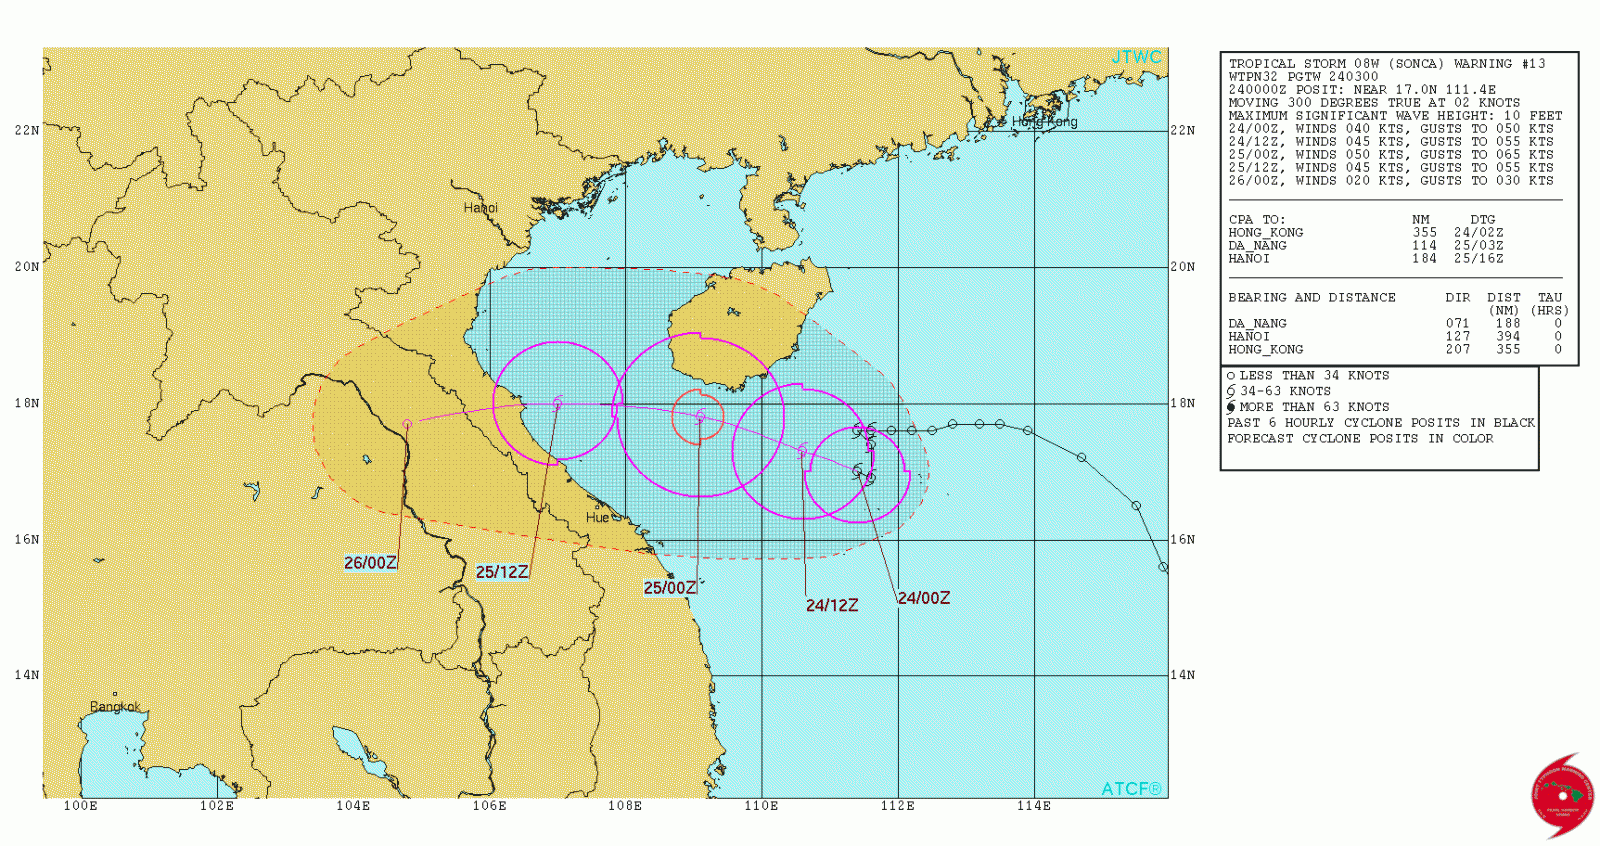 Tropical Storm Sonca JTWCforecast track on July 24, 2017